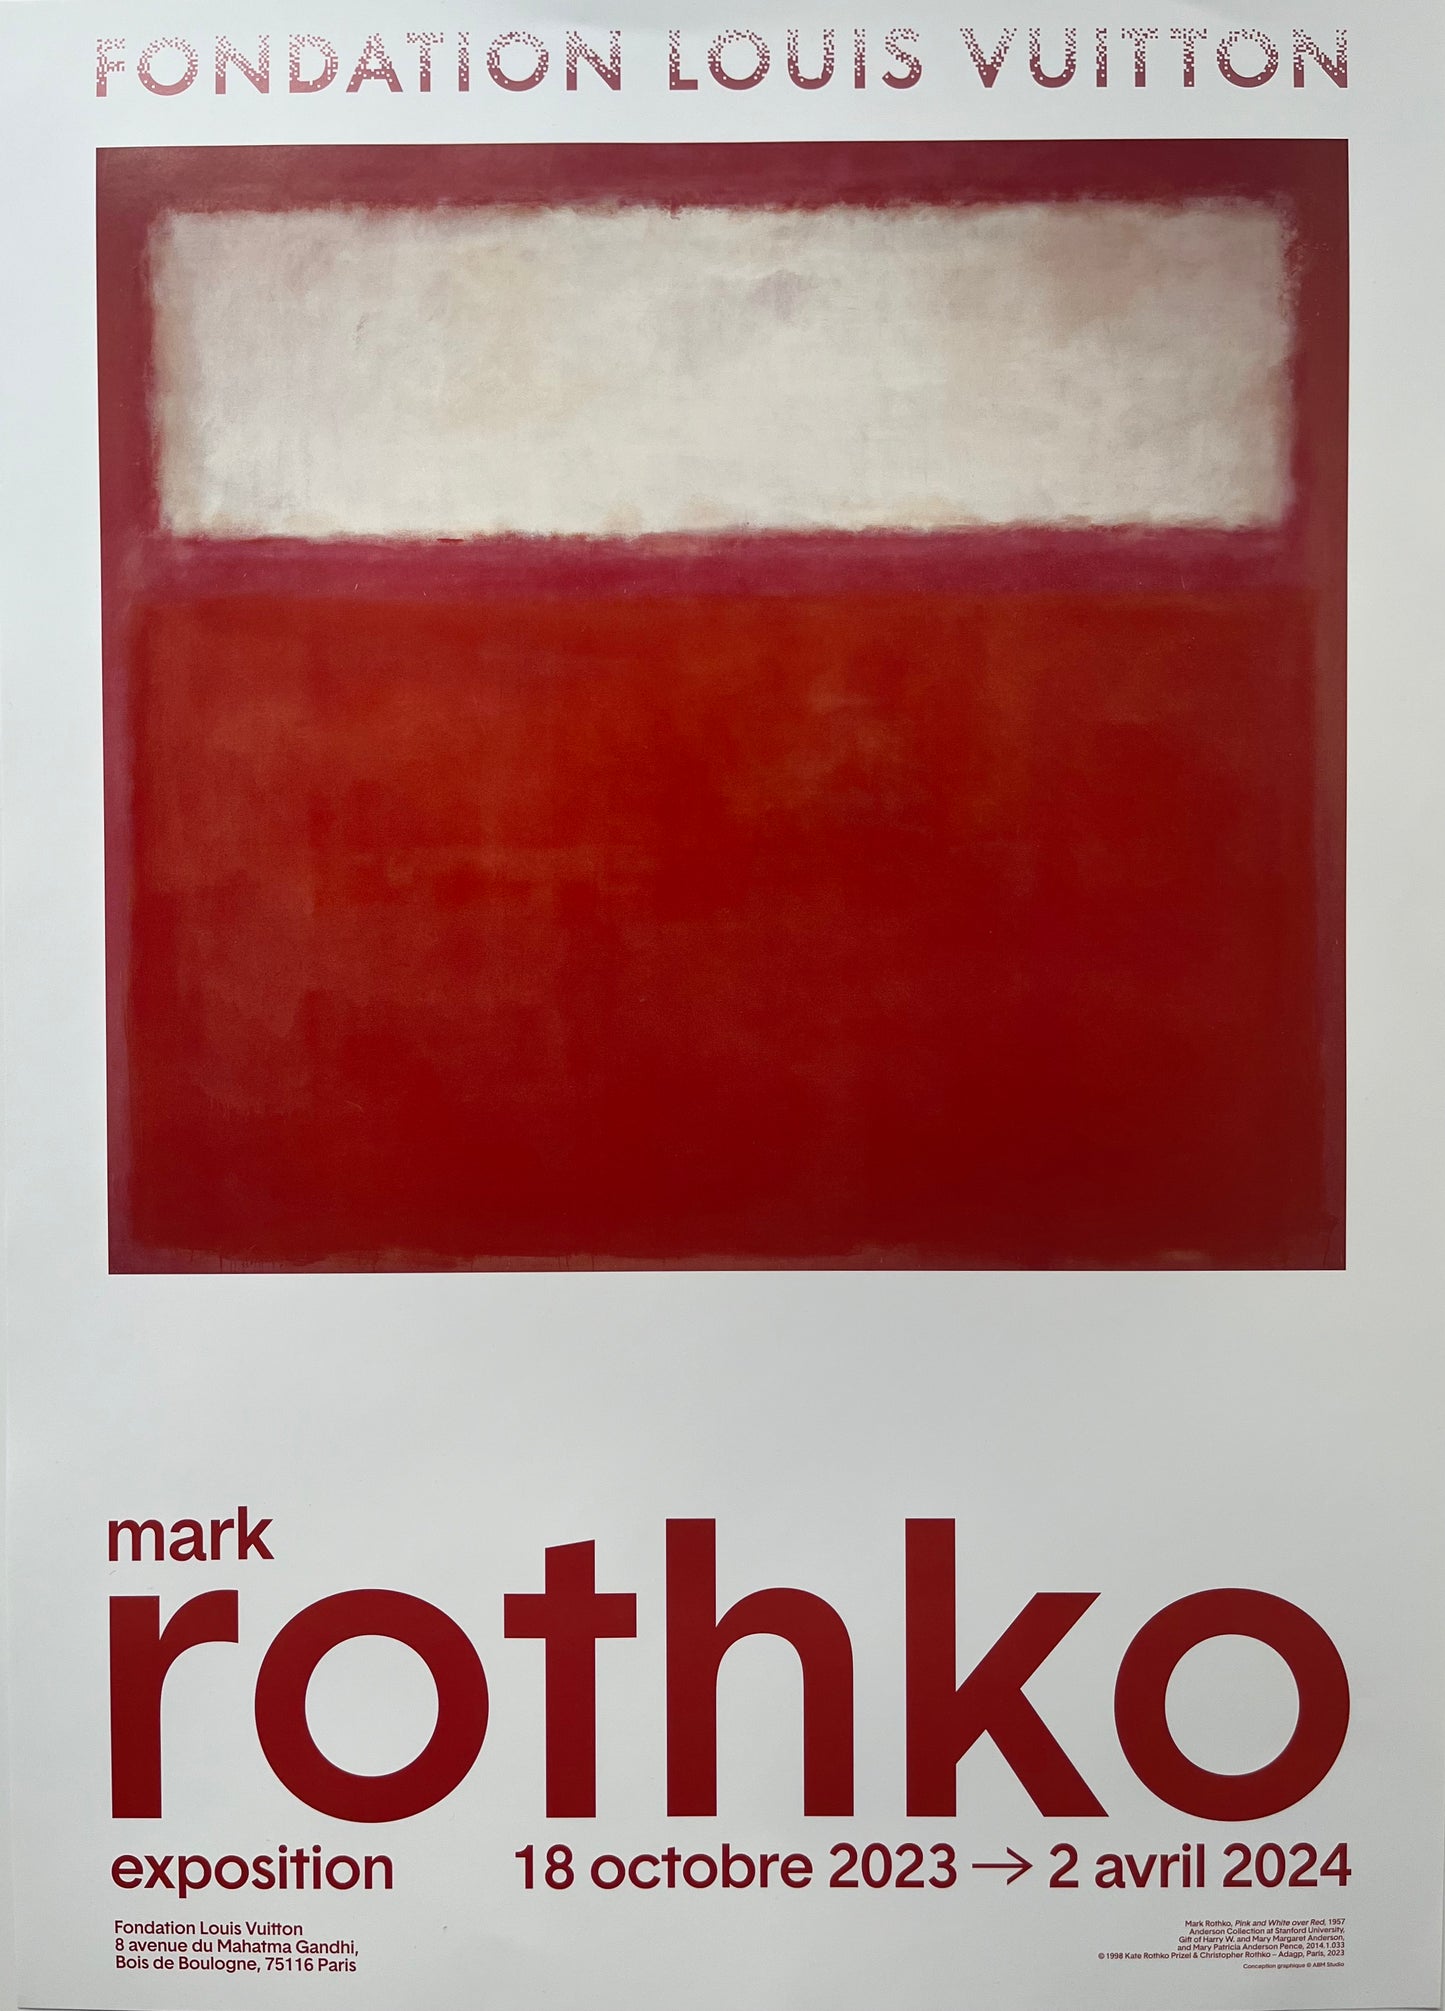 Mark Rothko - Ensemble de 2 posters - FONDATION LOUIS VUITTON - 2023